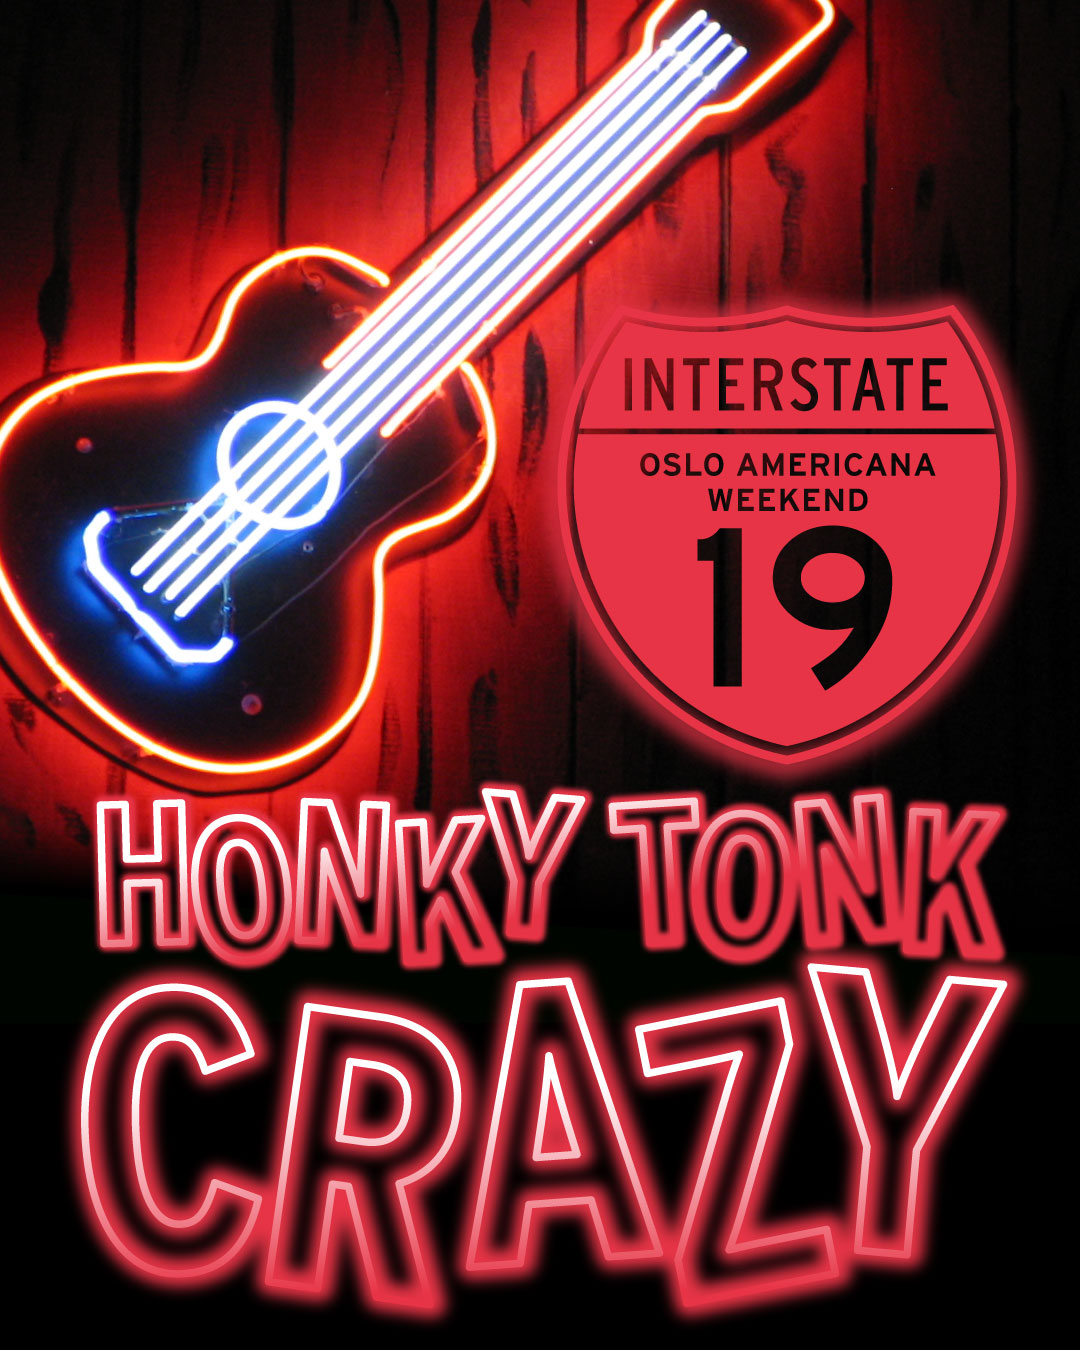 INTERSTATE 19 - HONKY TONK CRAZY